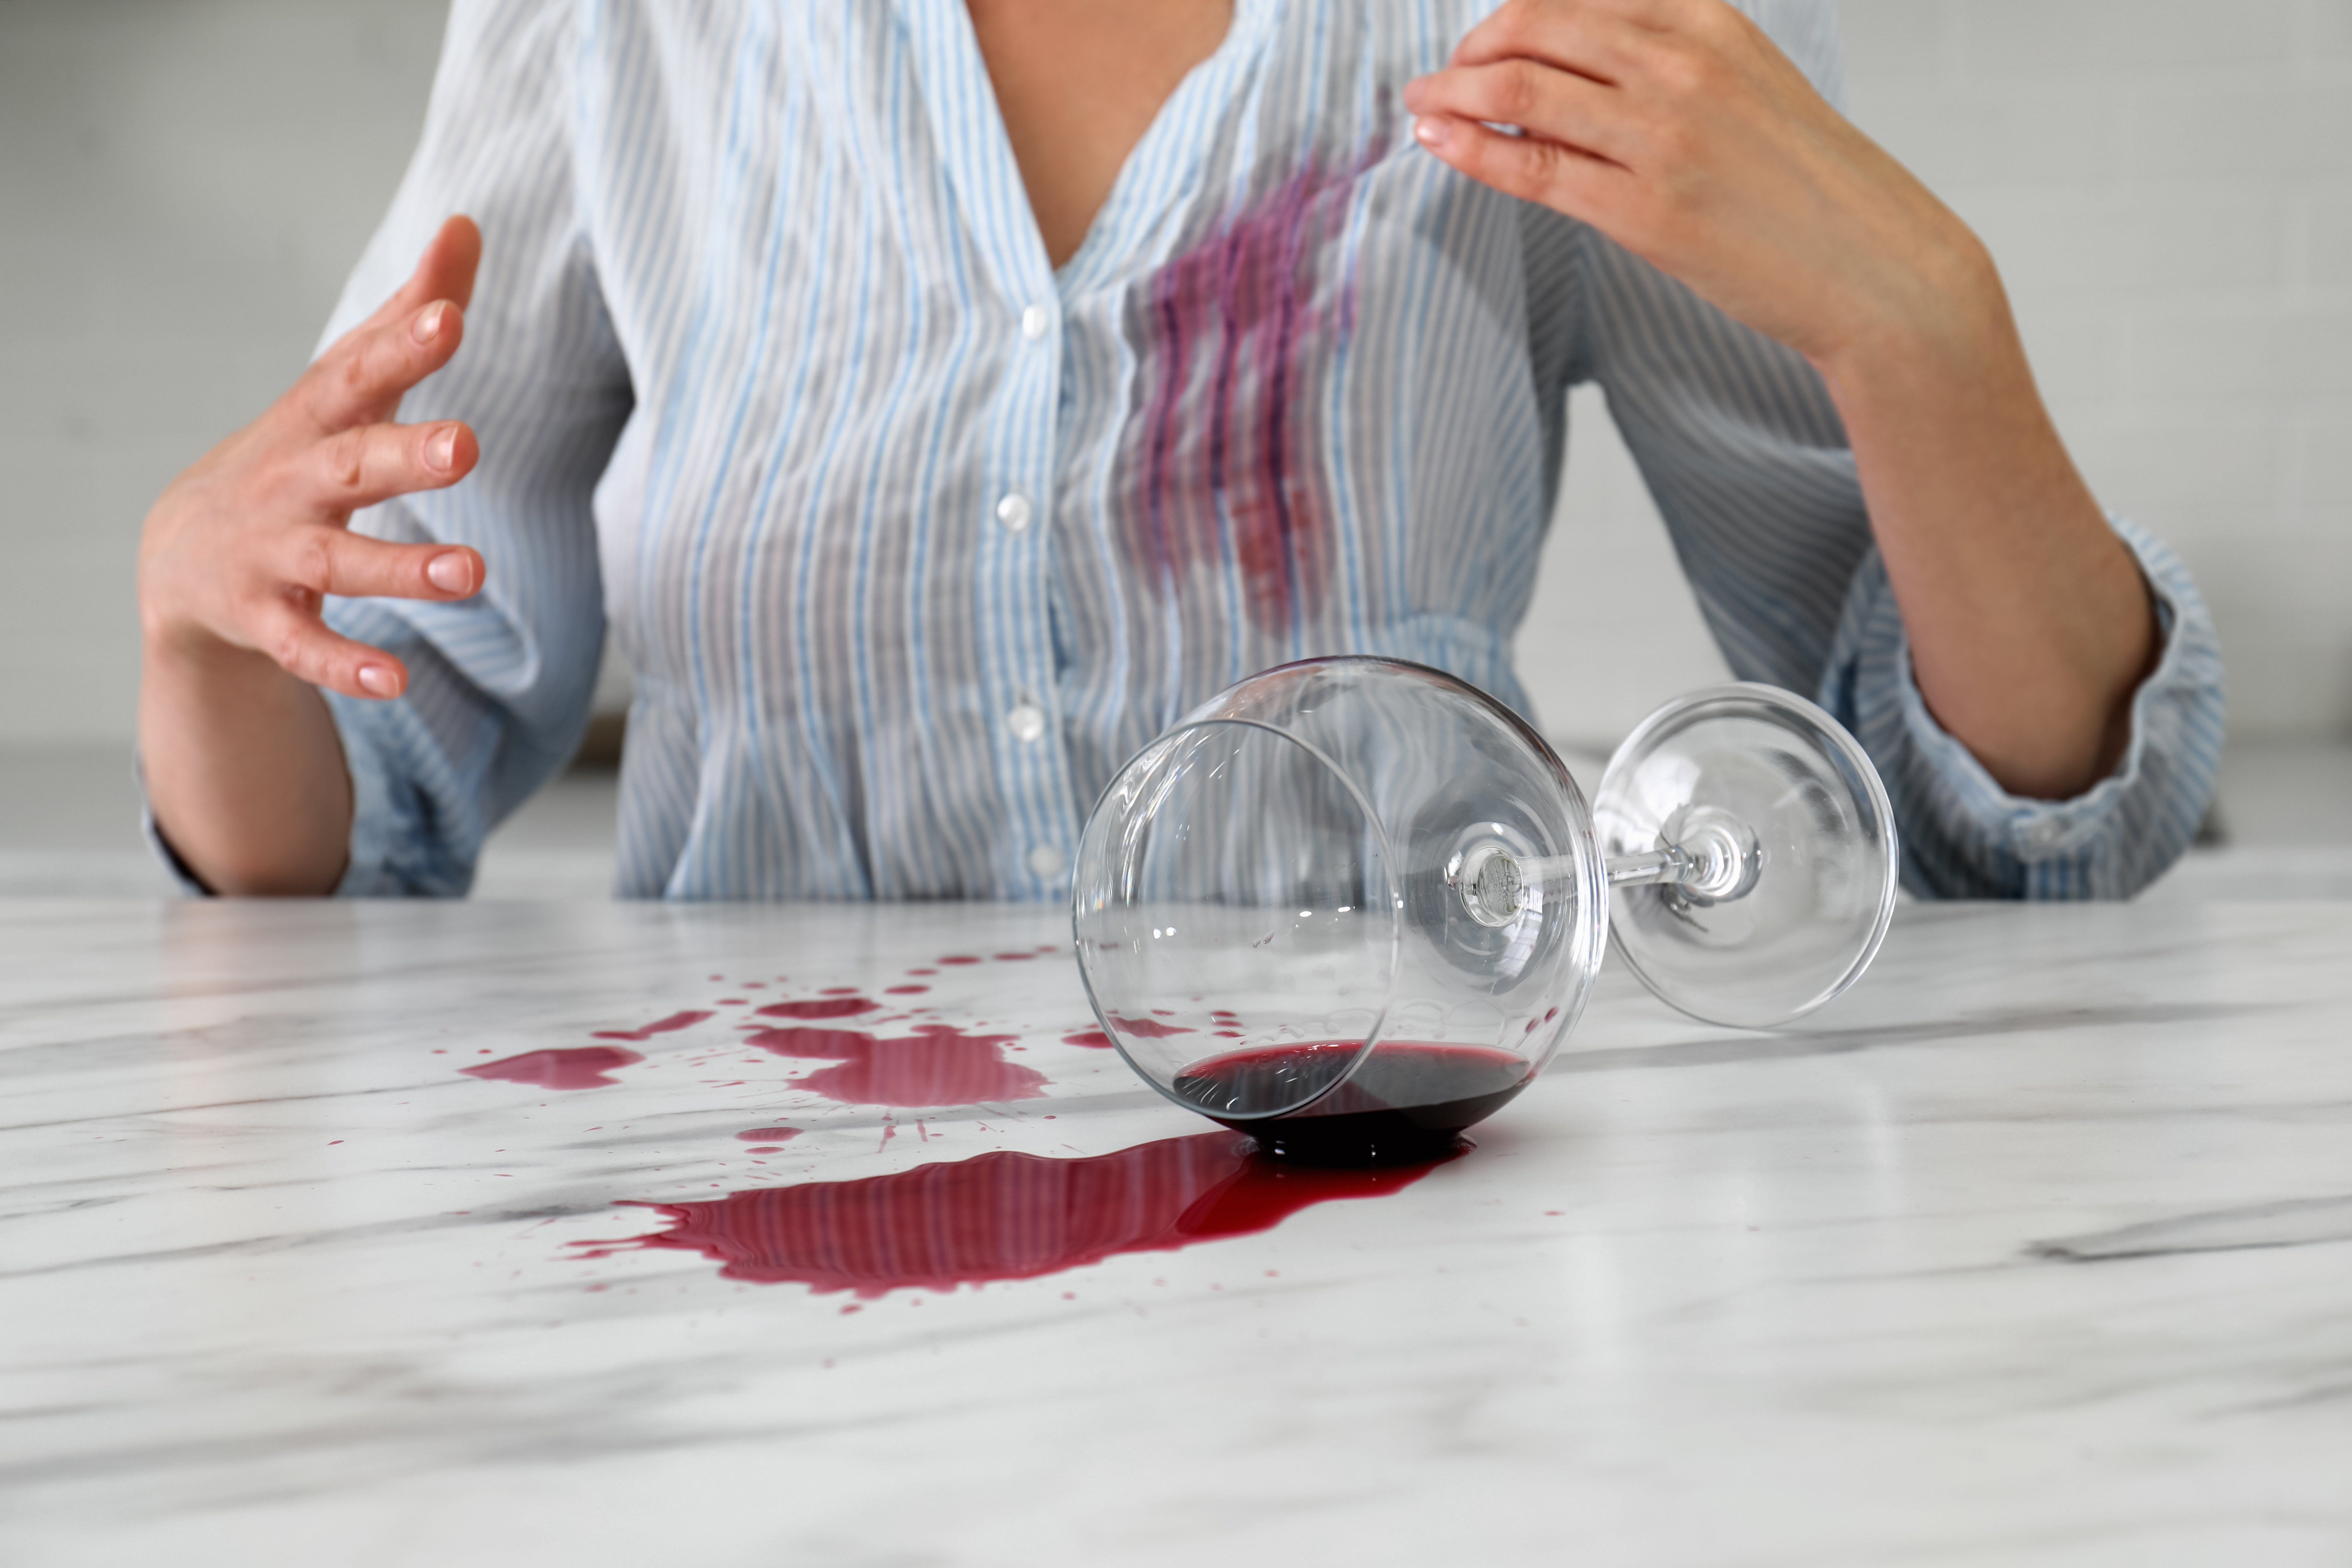 Spilled wine onto woman  | Shutterstock